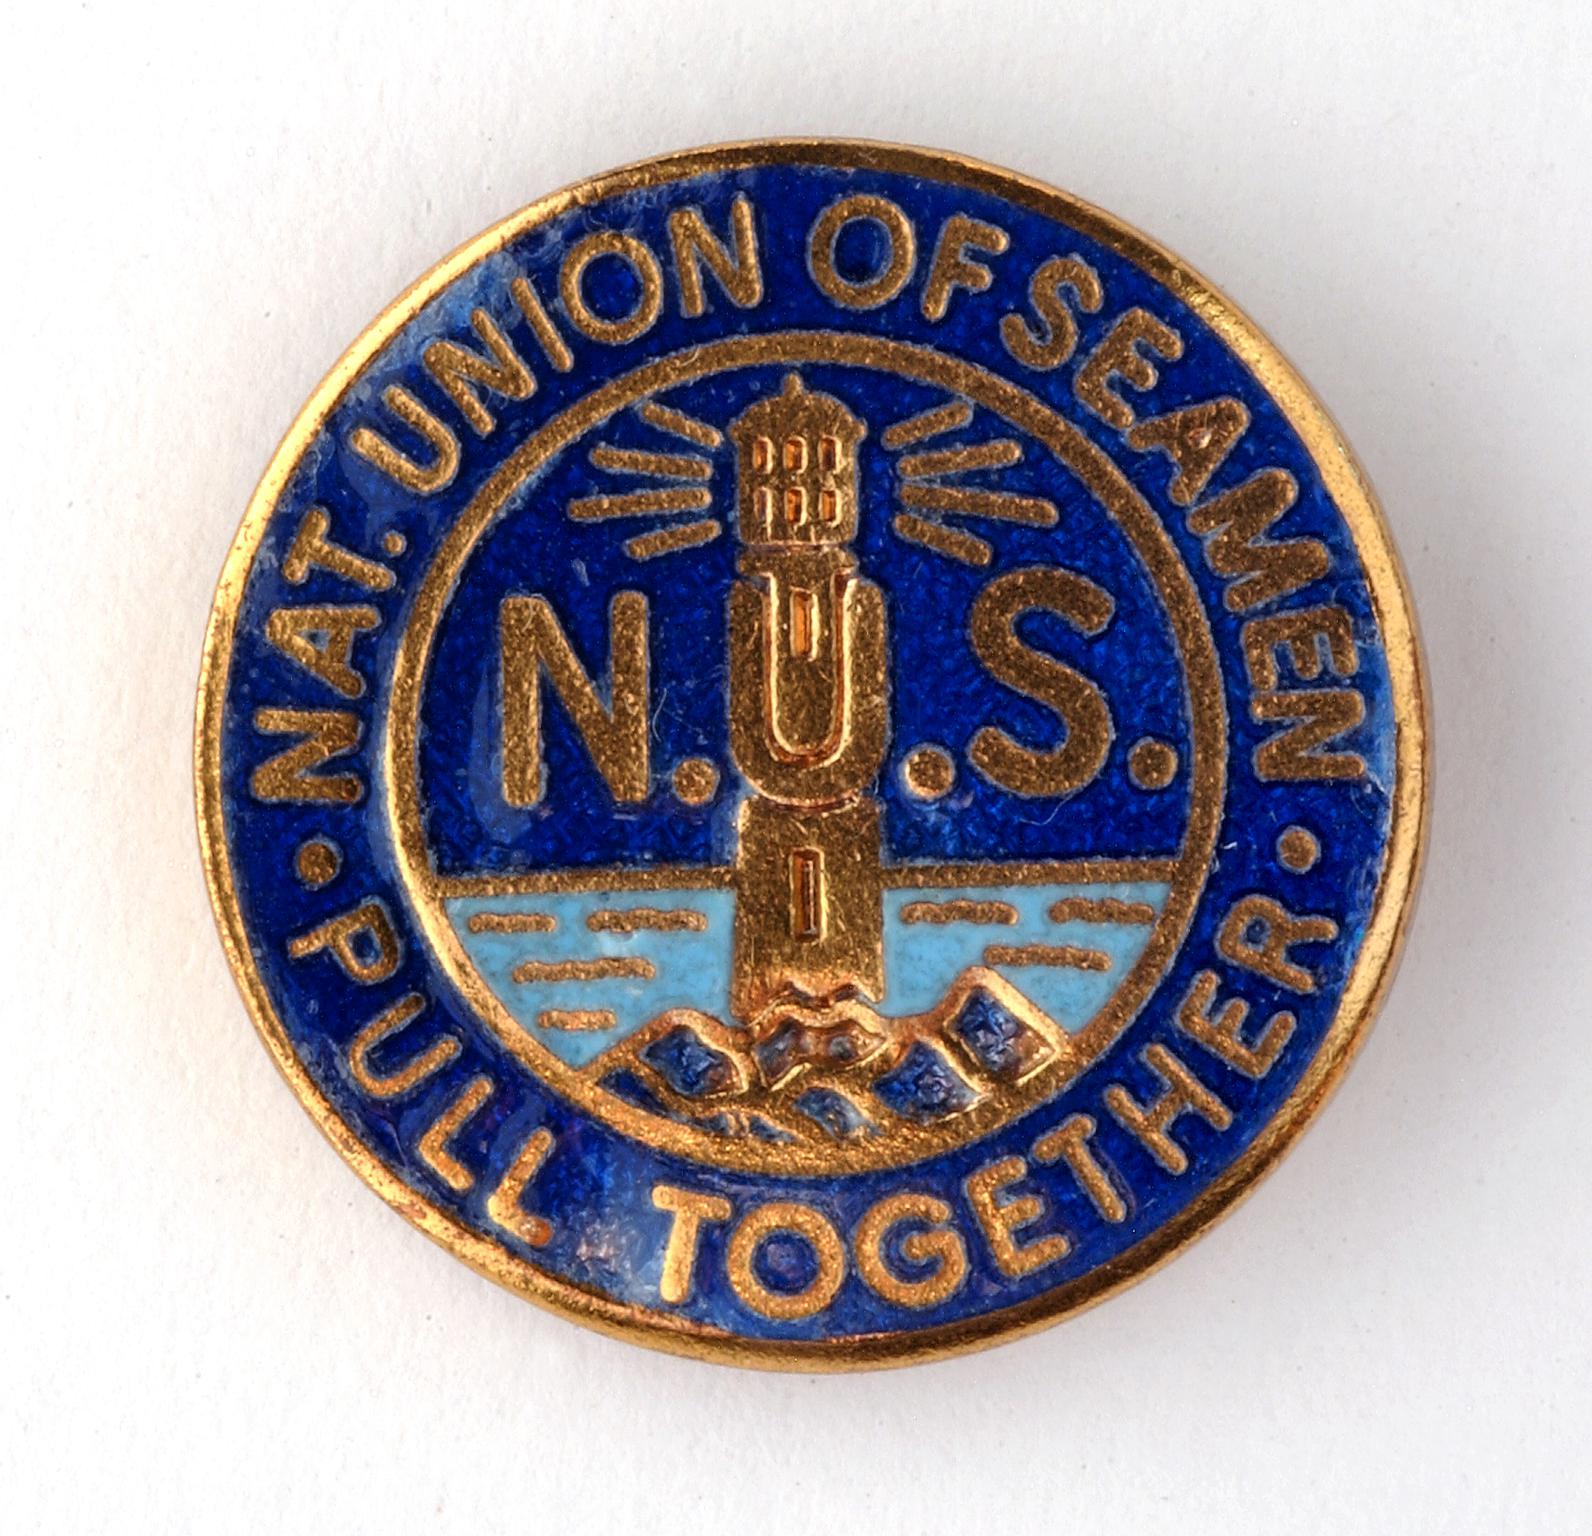 National Union of Seamen, badge